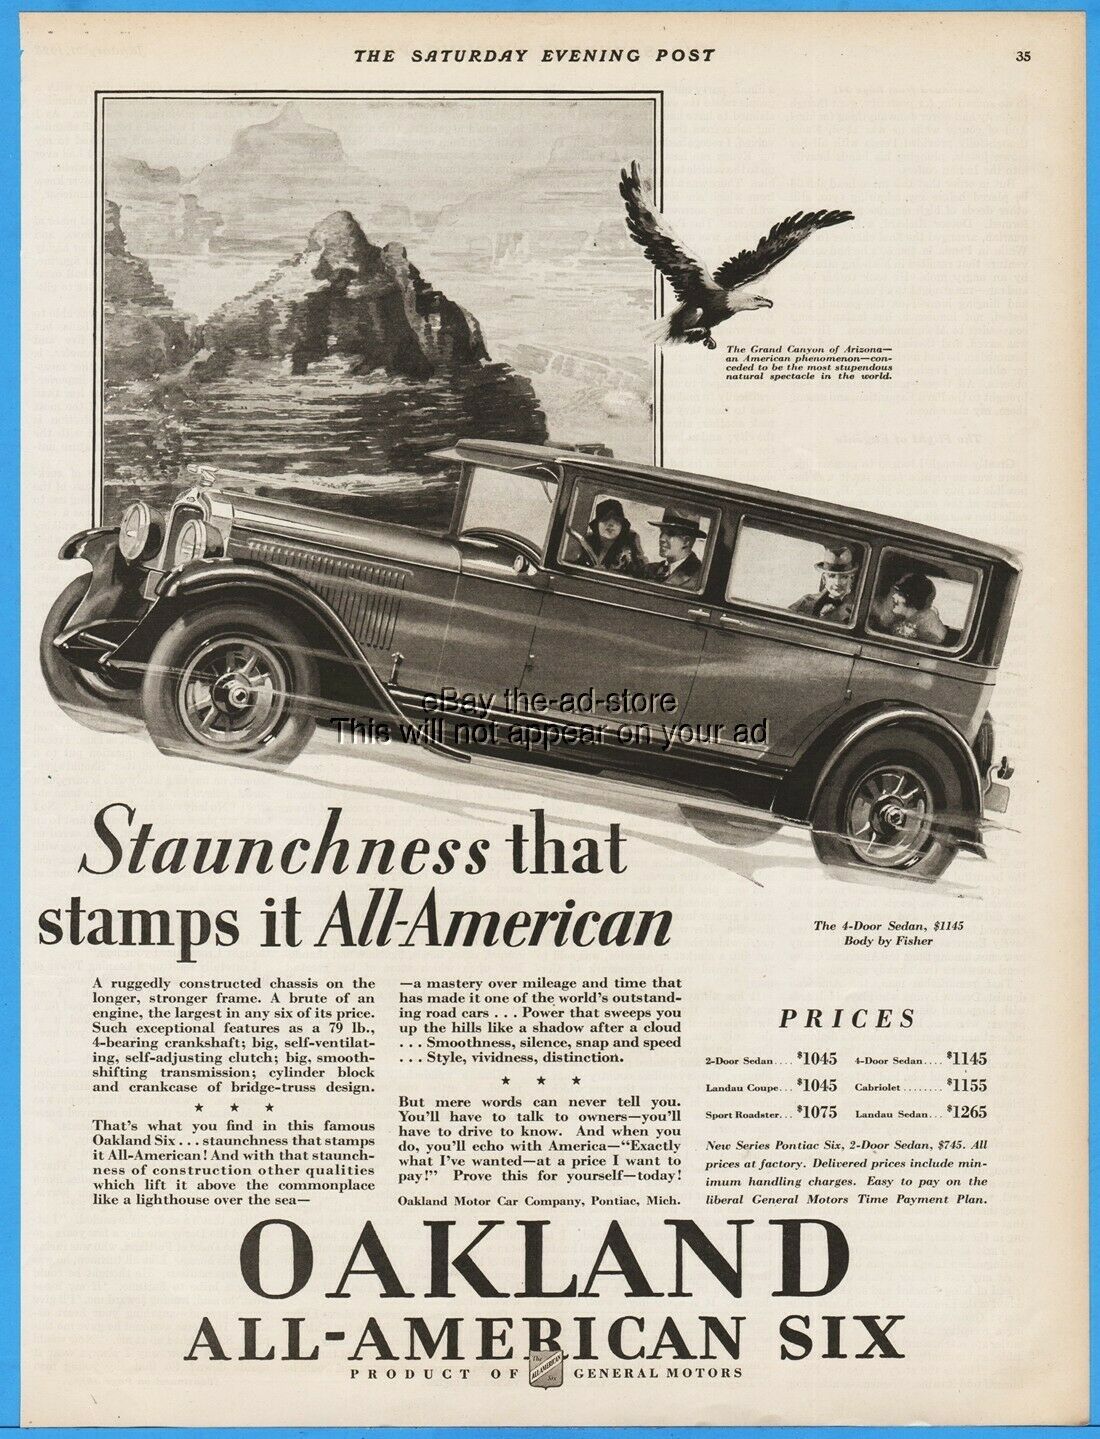 1928 Pontiac Six 4-door Sedan Oakland Motor Car Michigan Gm Grand Canyon Az Ad